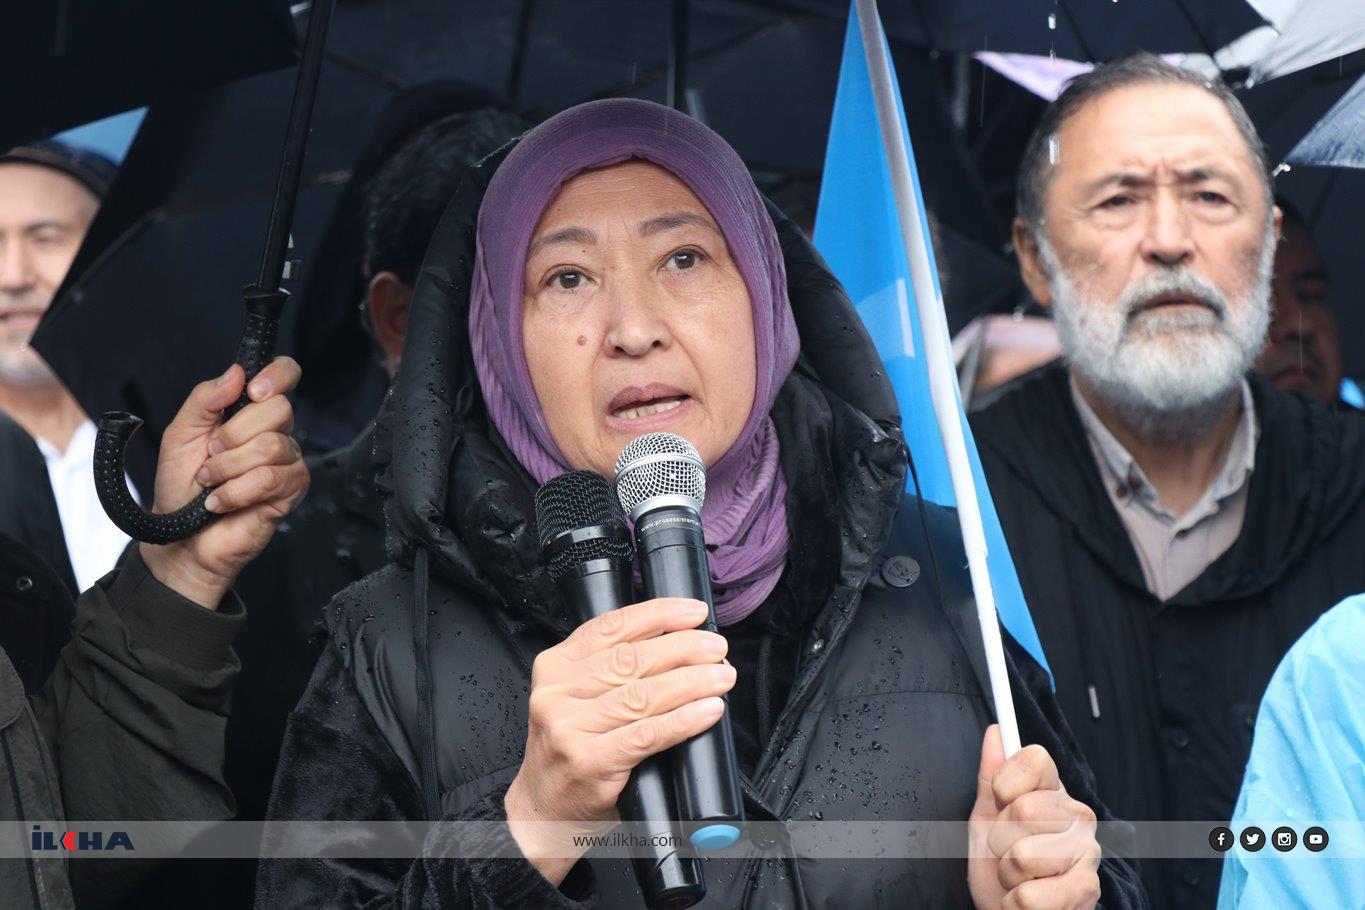 Doğu Türkistan işgalinin 74'ünci yılında Çin protestosu